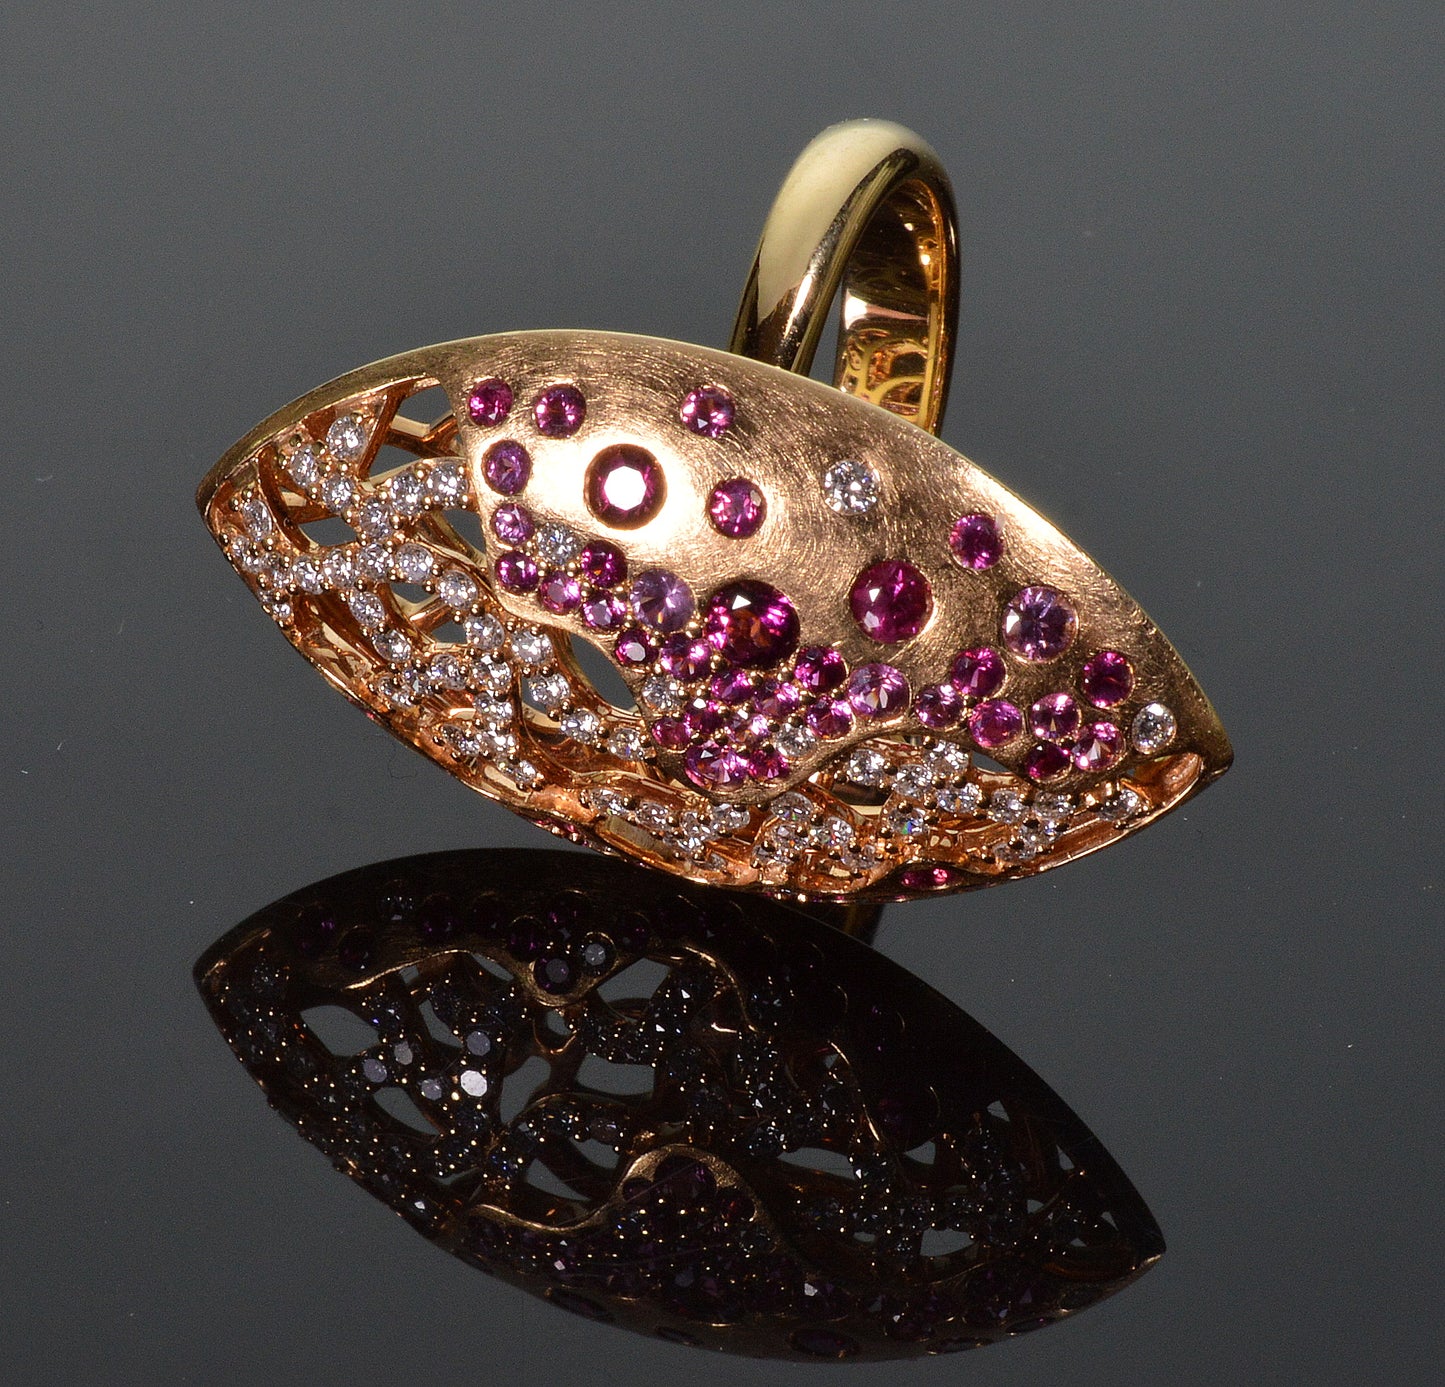 Bucherer 18k Gold Diamond Pink Sapphire Ring Size 7 1/4